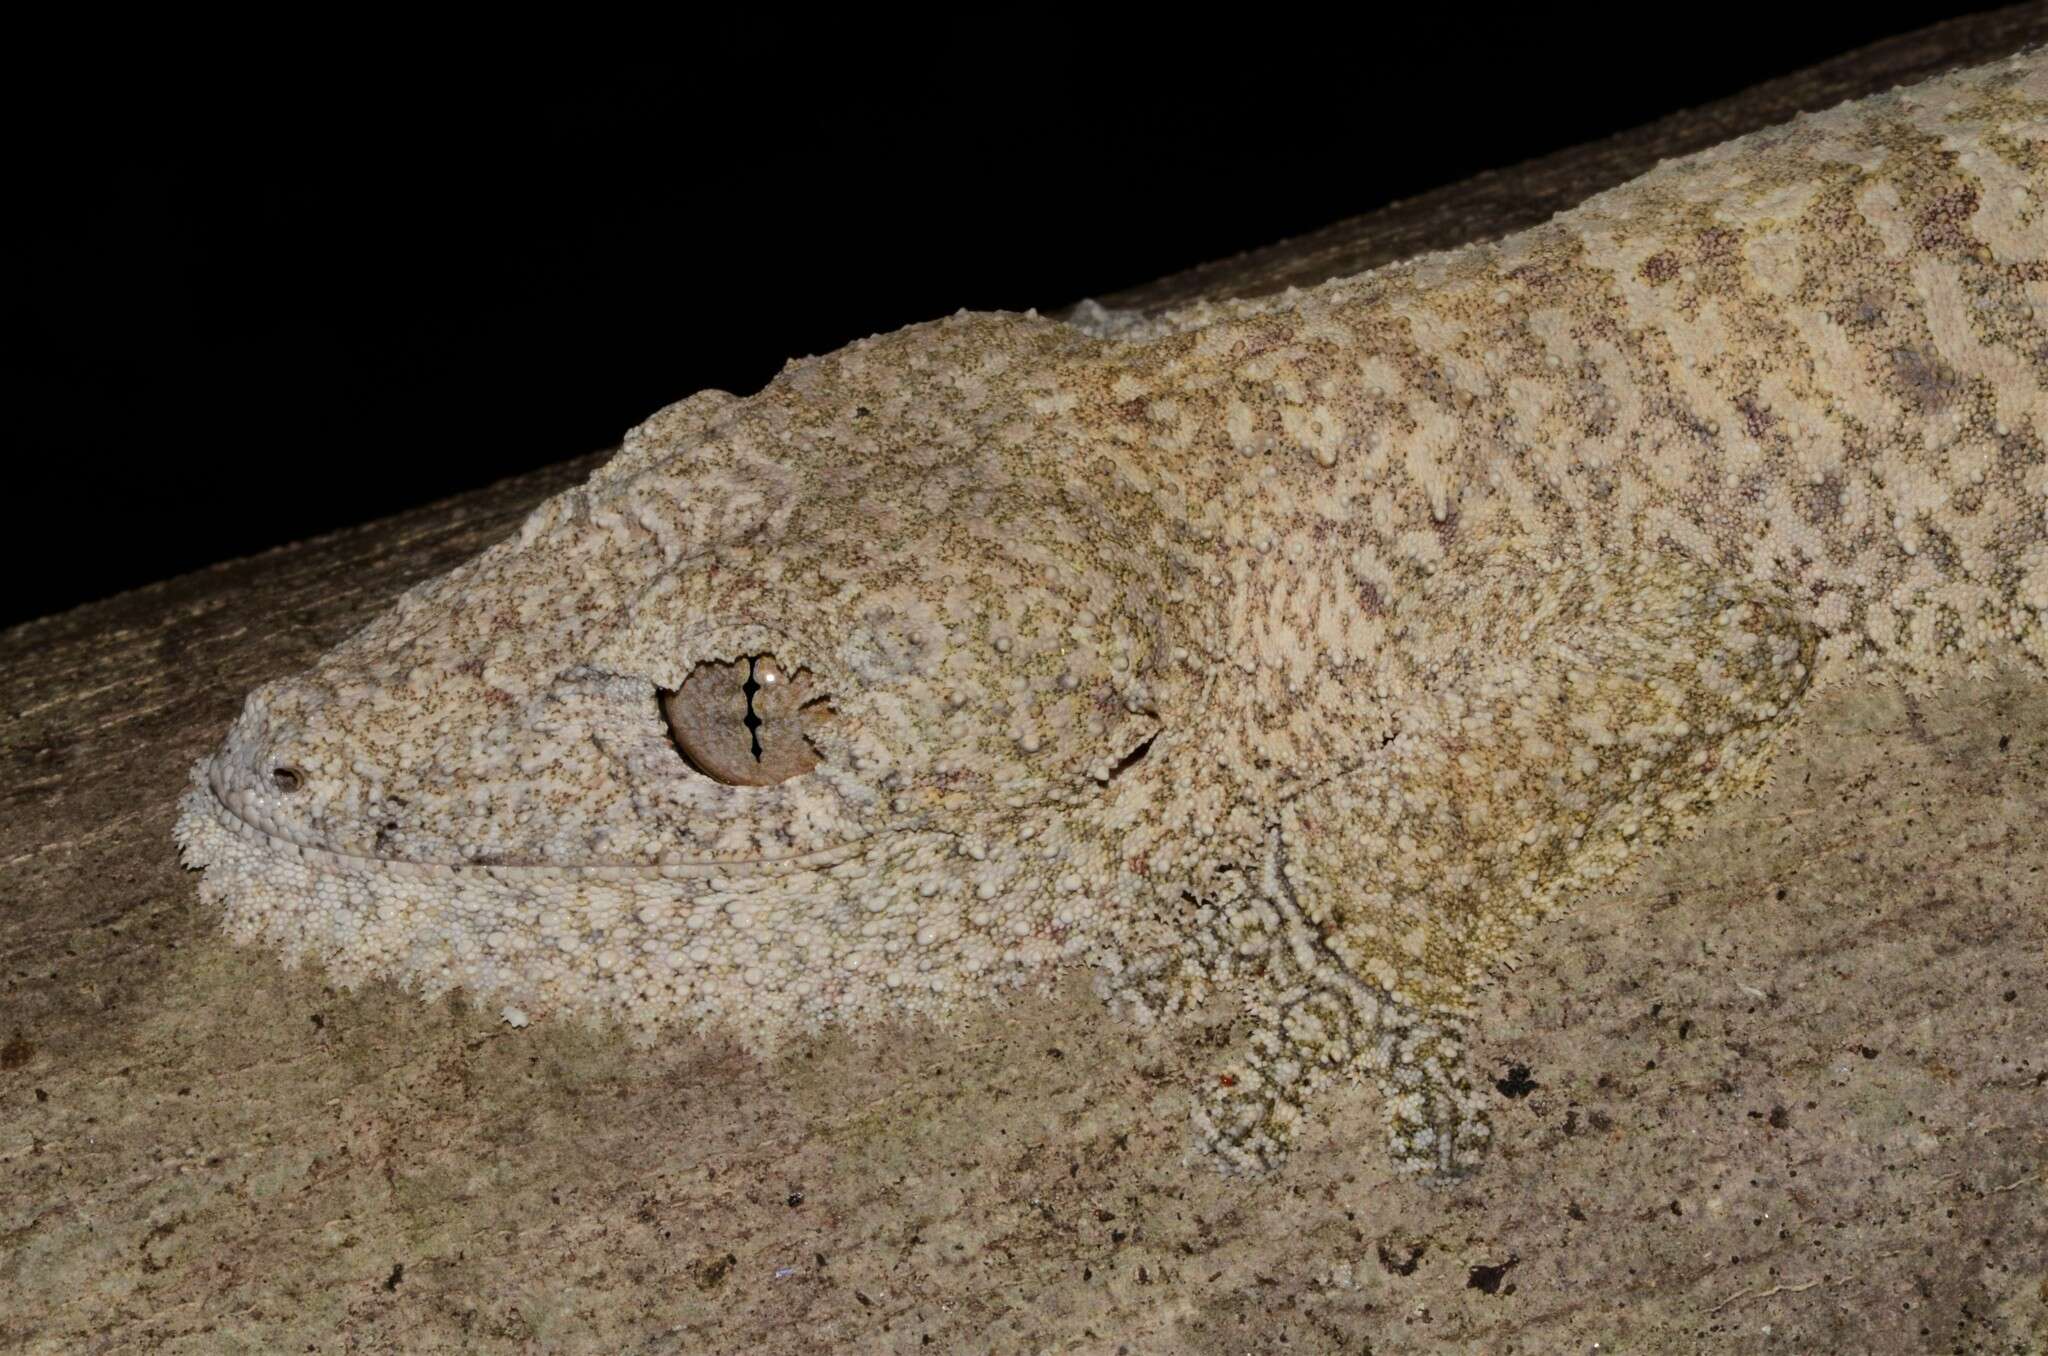 Image of Henkel’s flat-tailed gecko